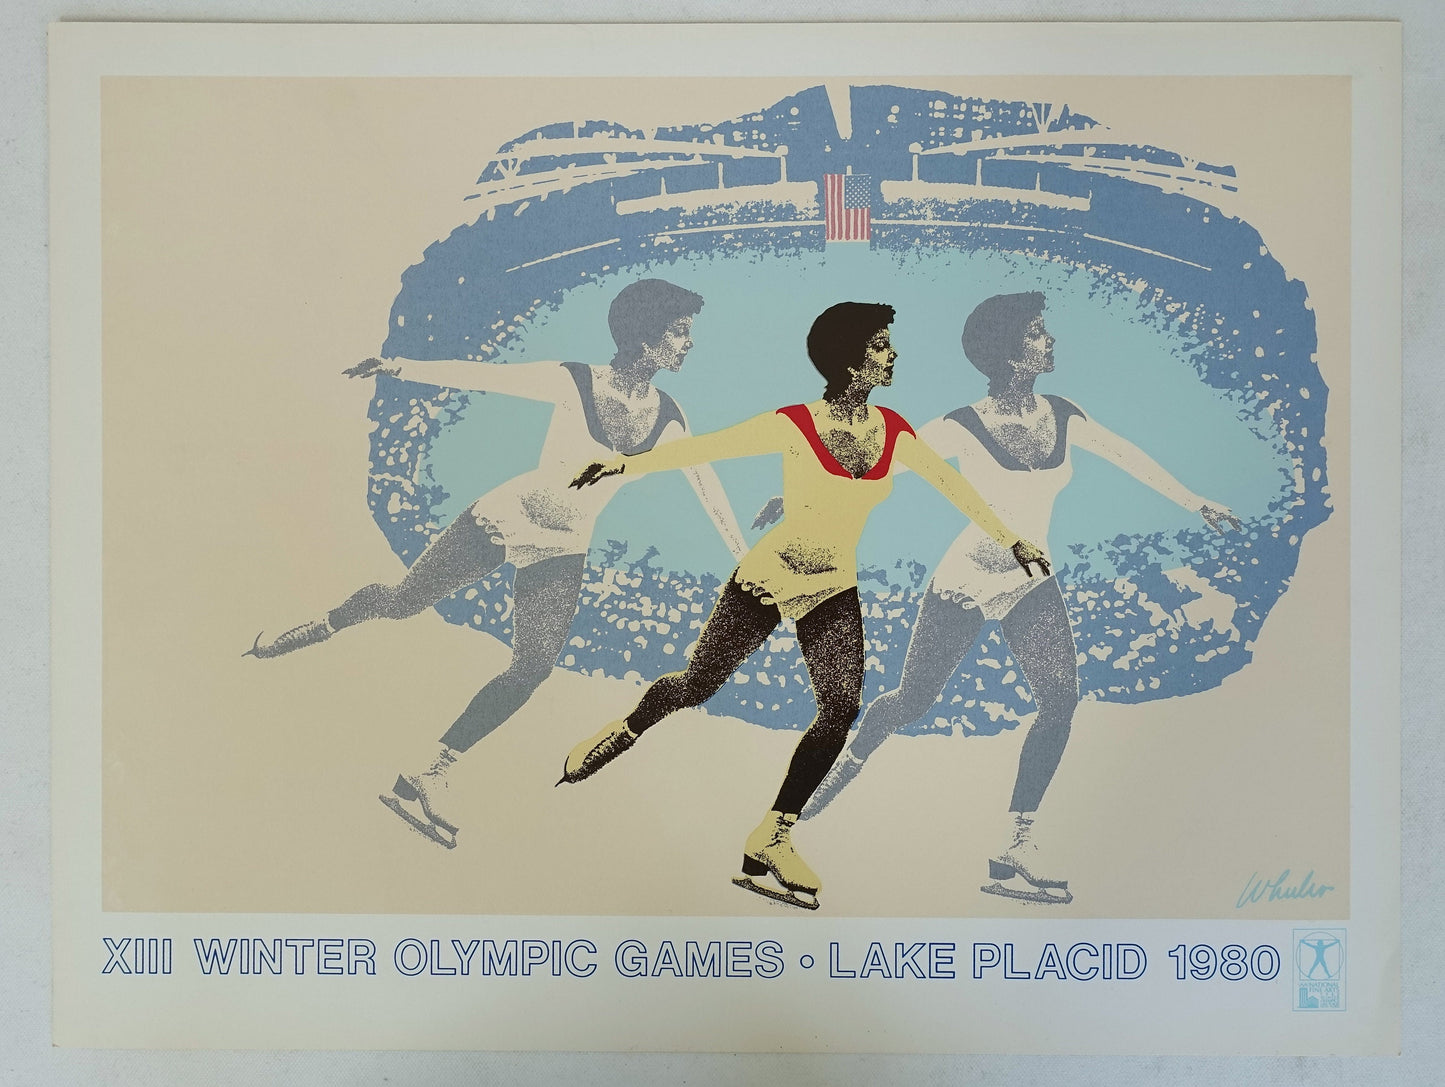 1980 Olympic Winter Games Lake Placid (figure skating) - Original Vintage Poster